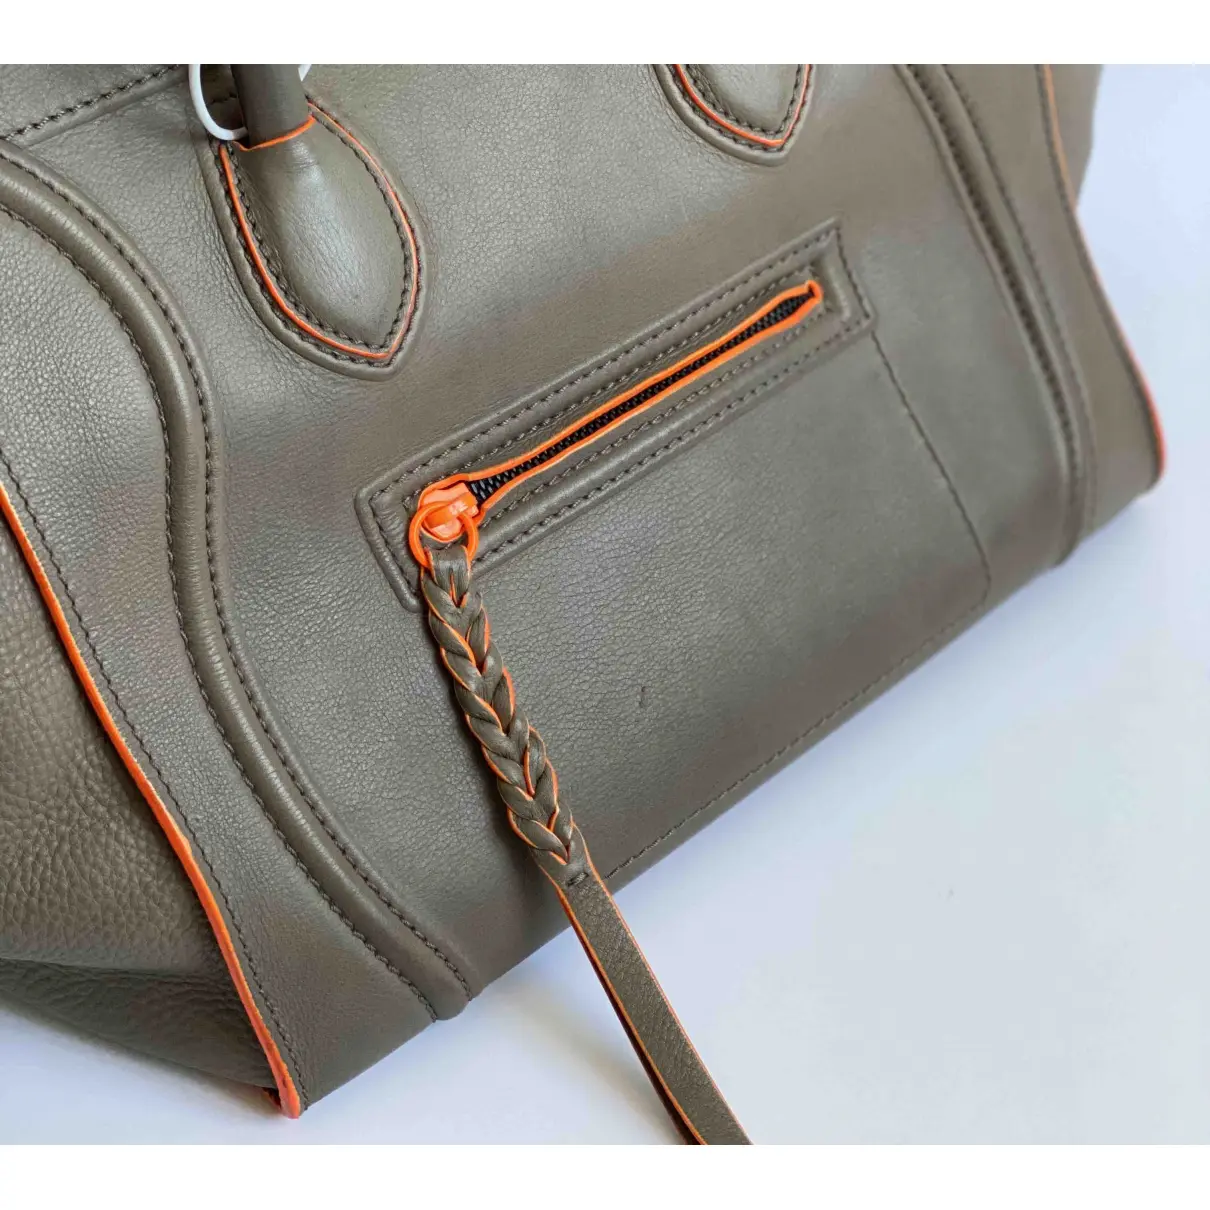 Buy Celine Luggage Phantom leather bag online